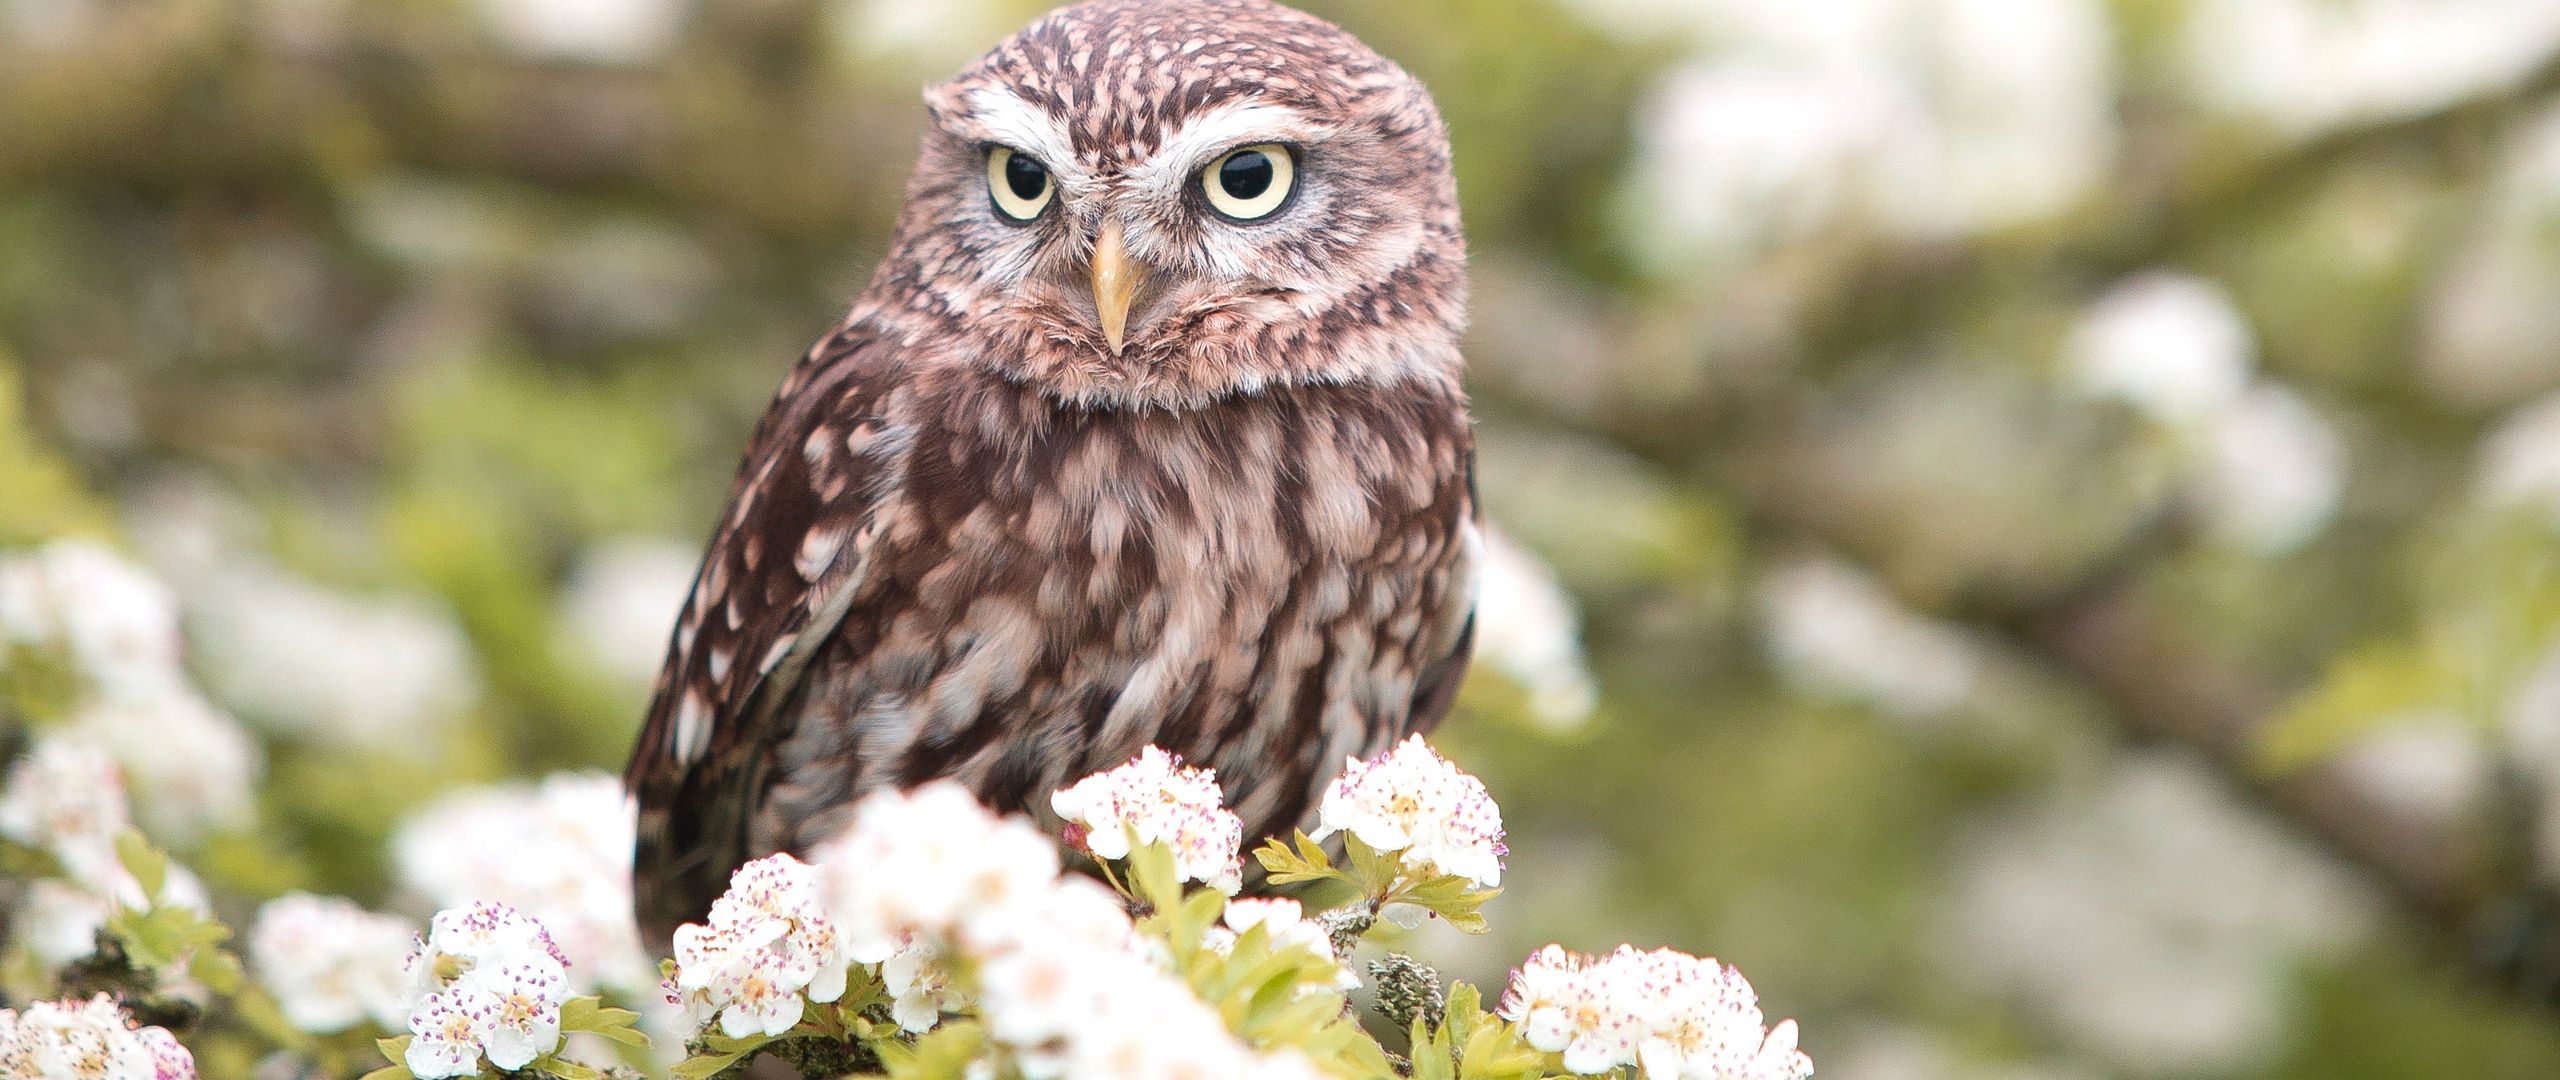 Download wallpaper 2560x1080 owl, bird, spring, predator, flowers